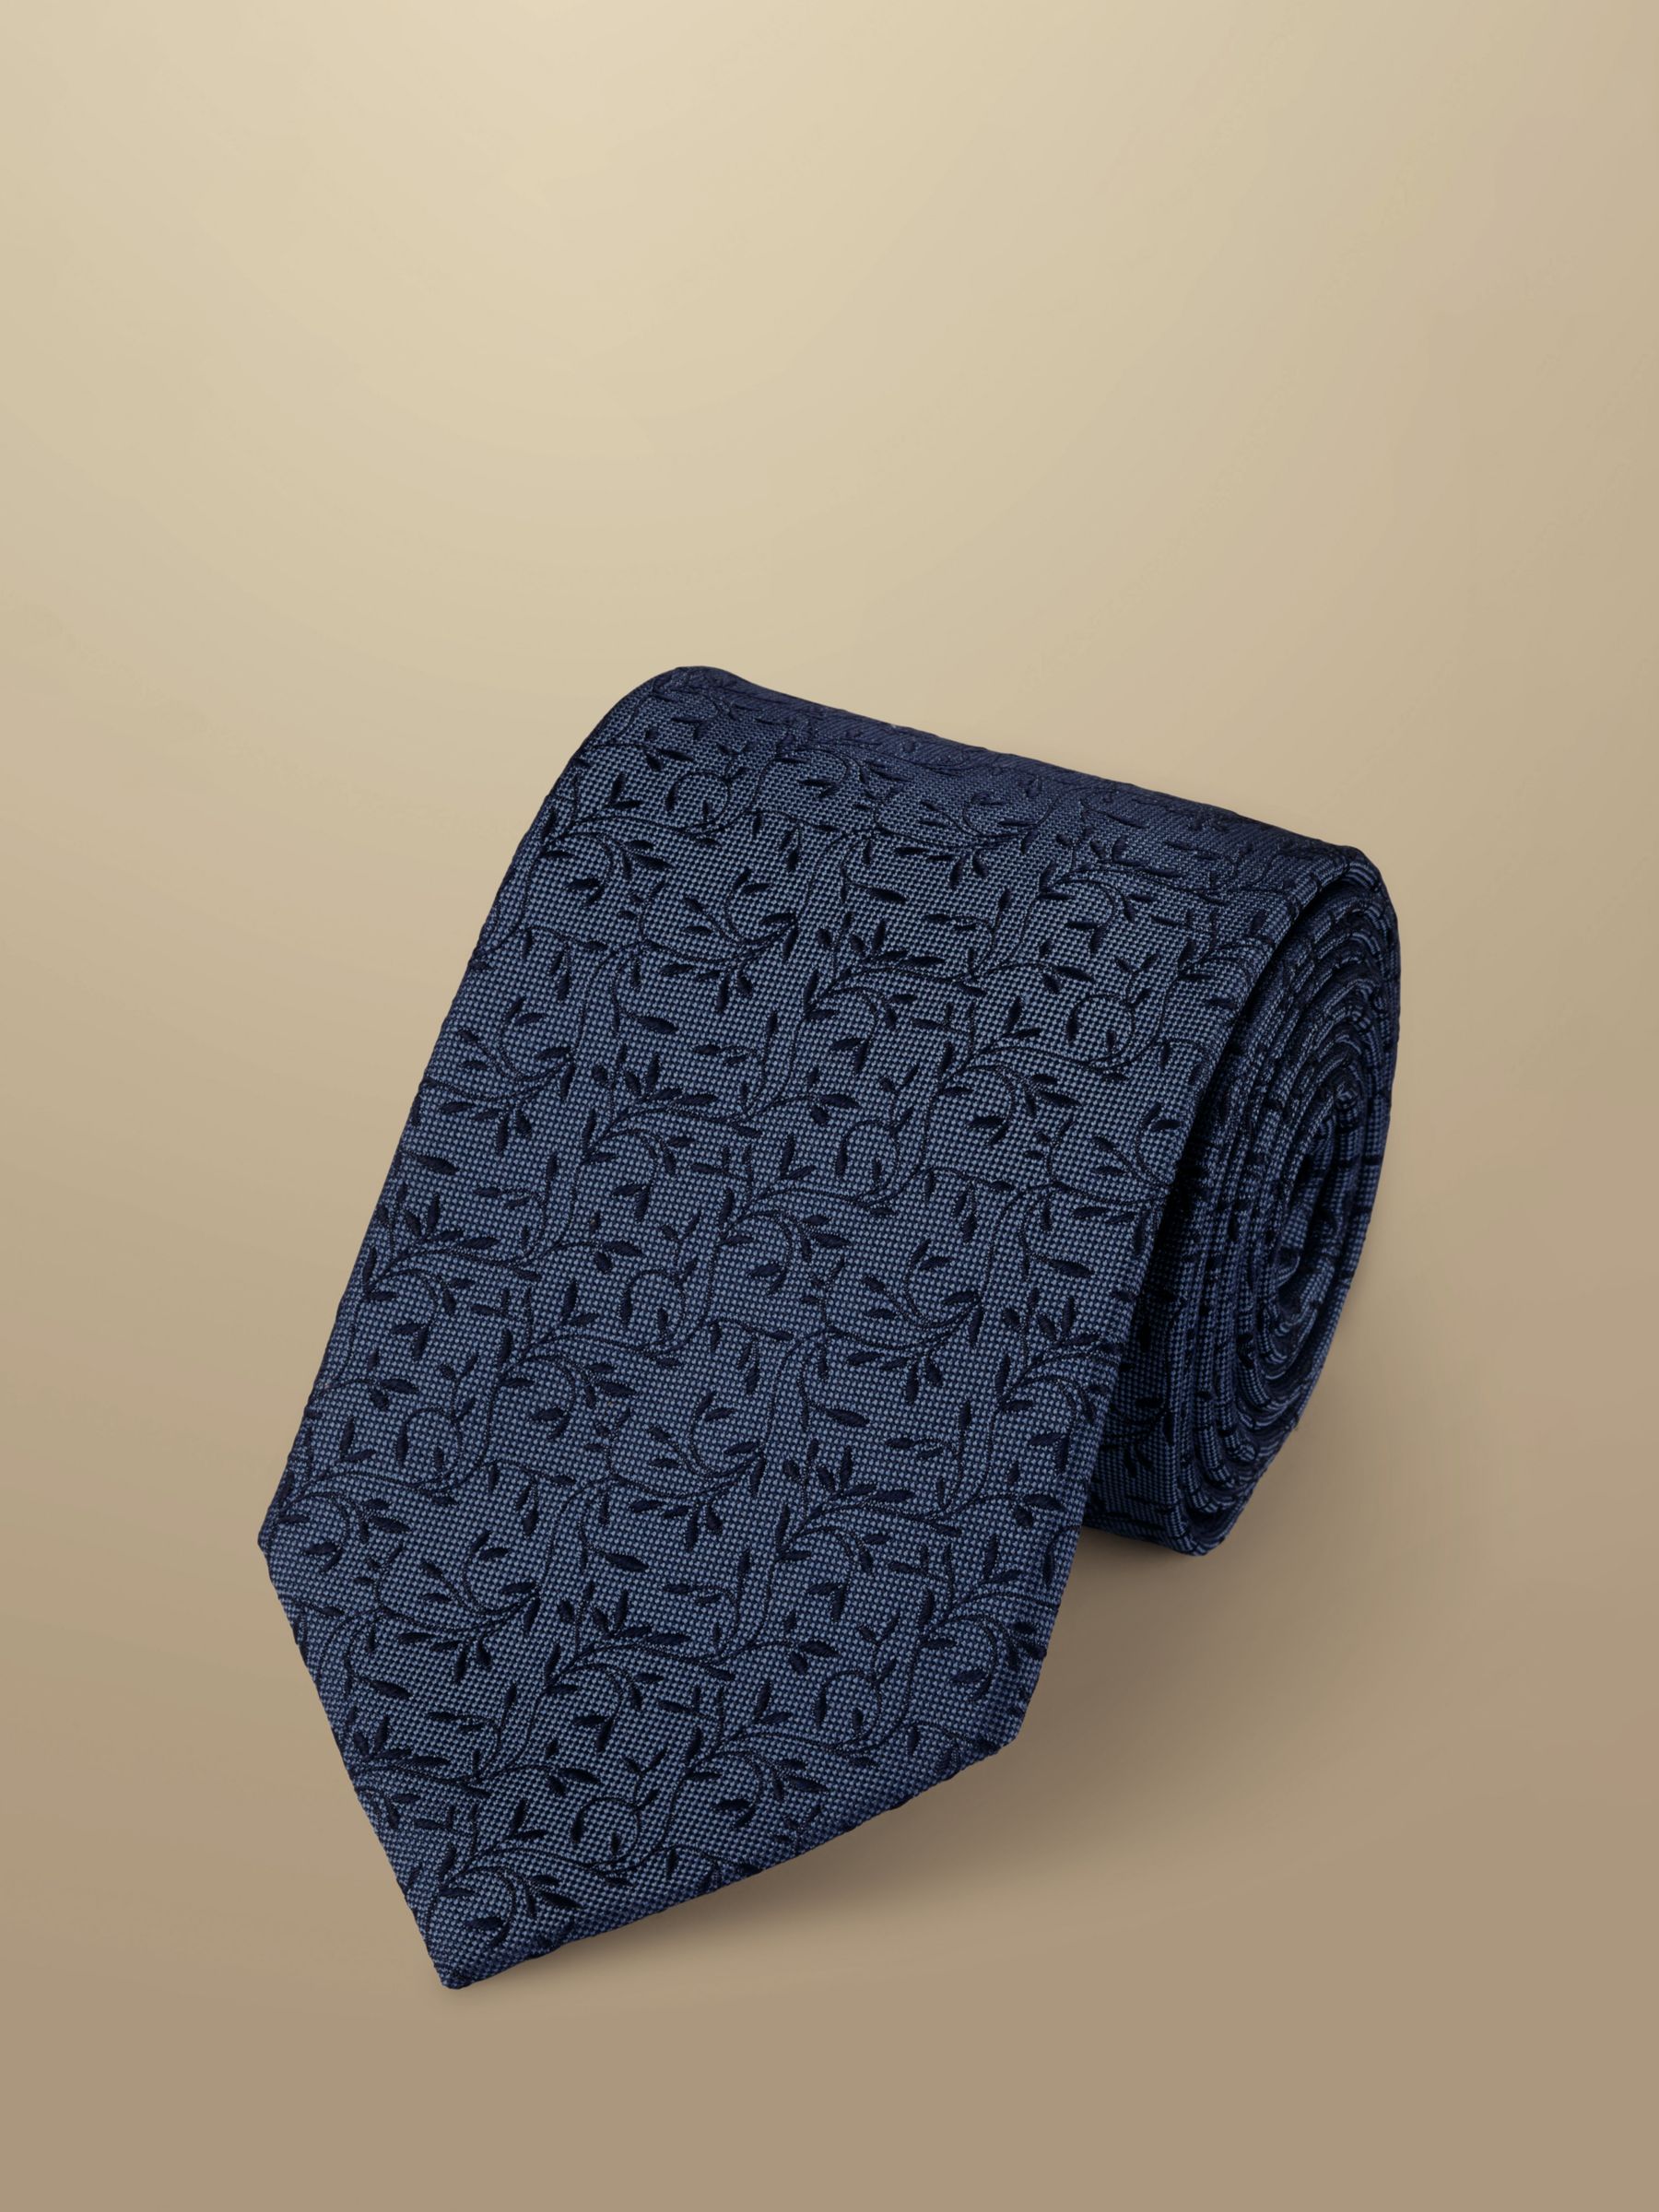 Charles Tyrwhitt Floral Print Silk Tie, Petrol Blue